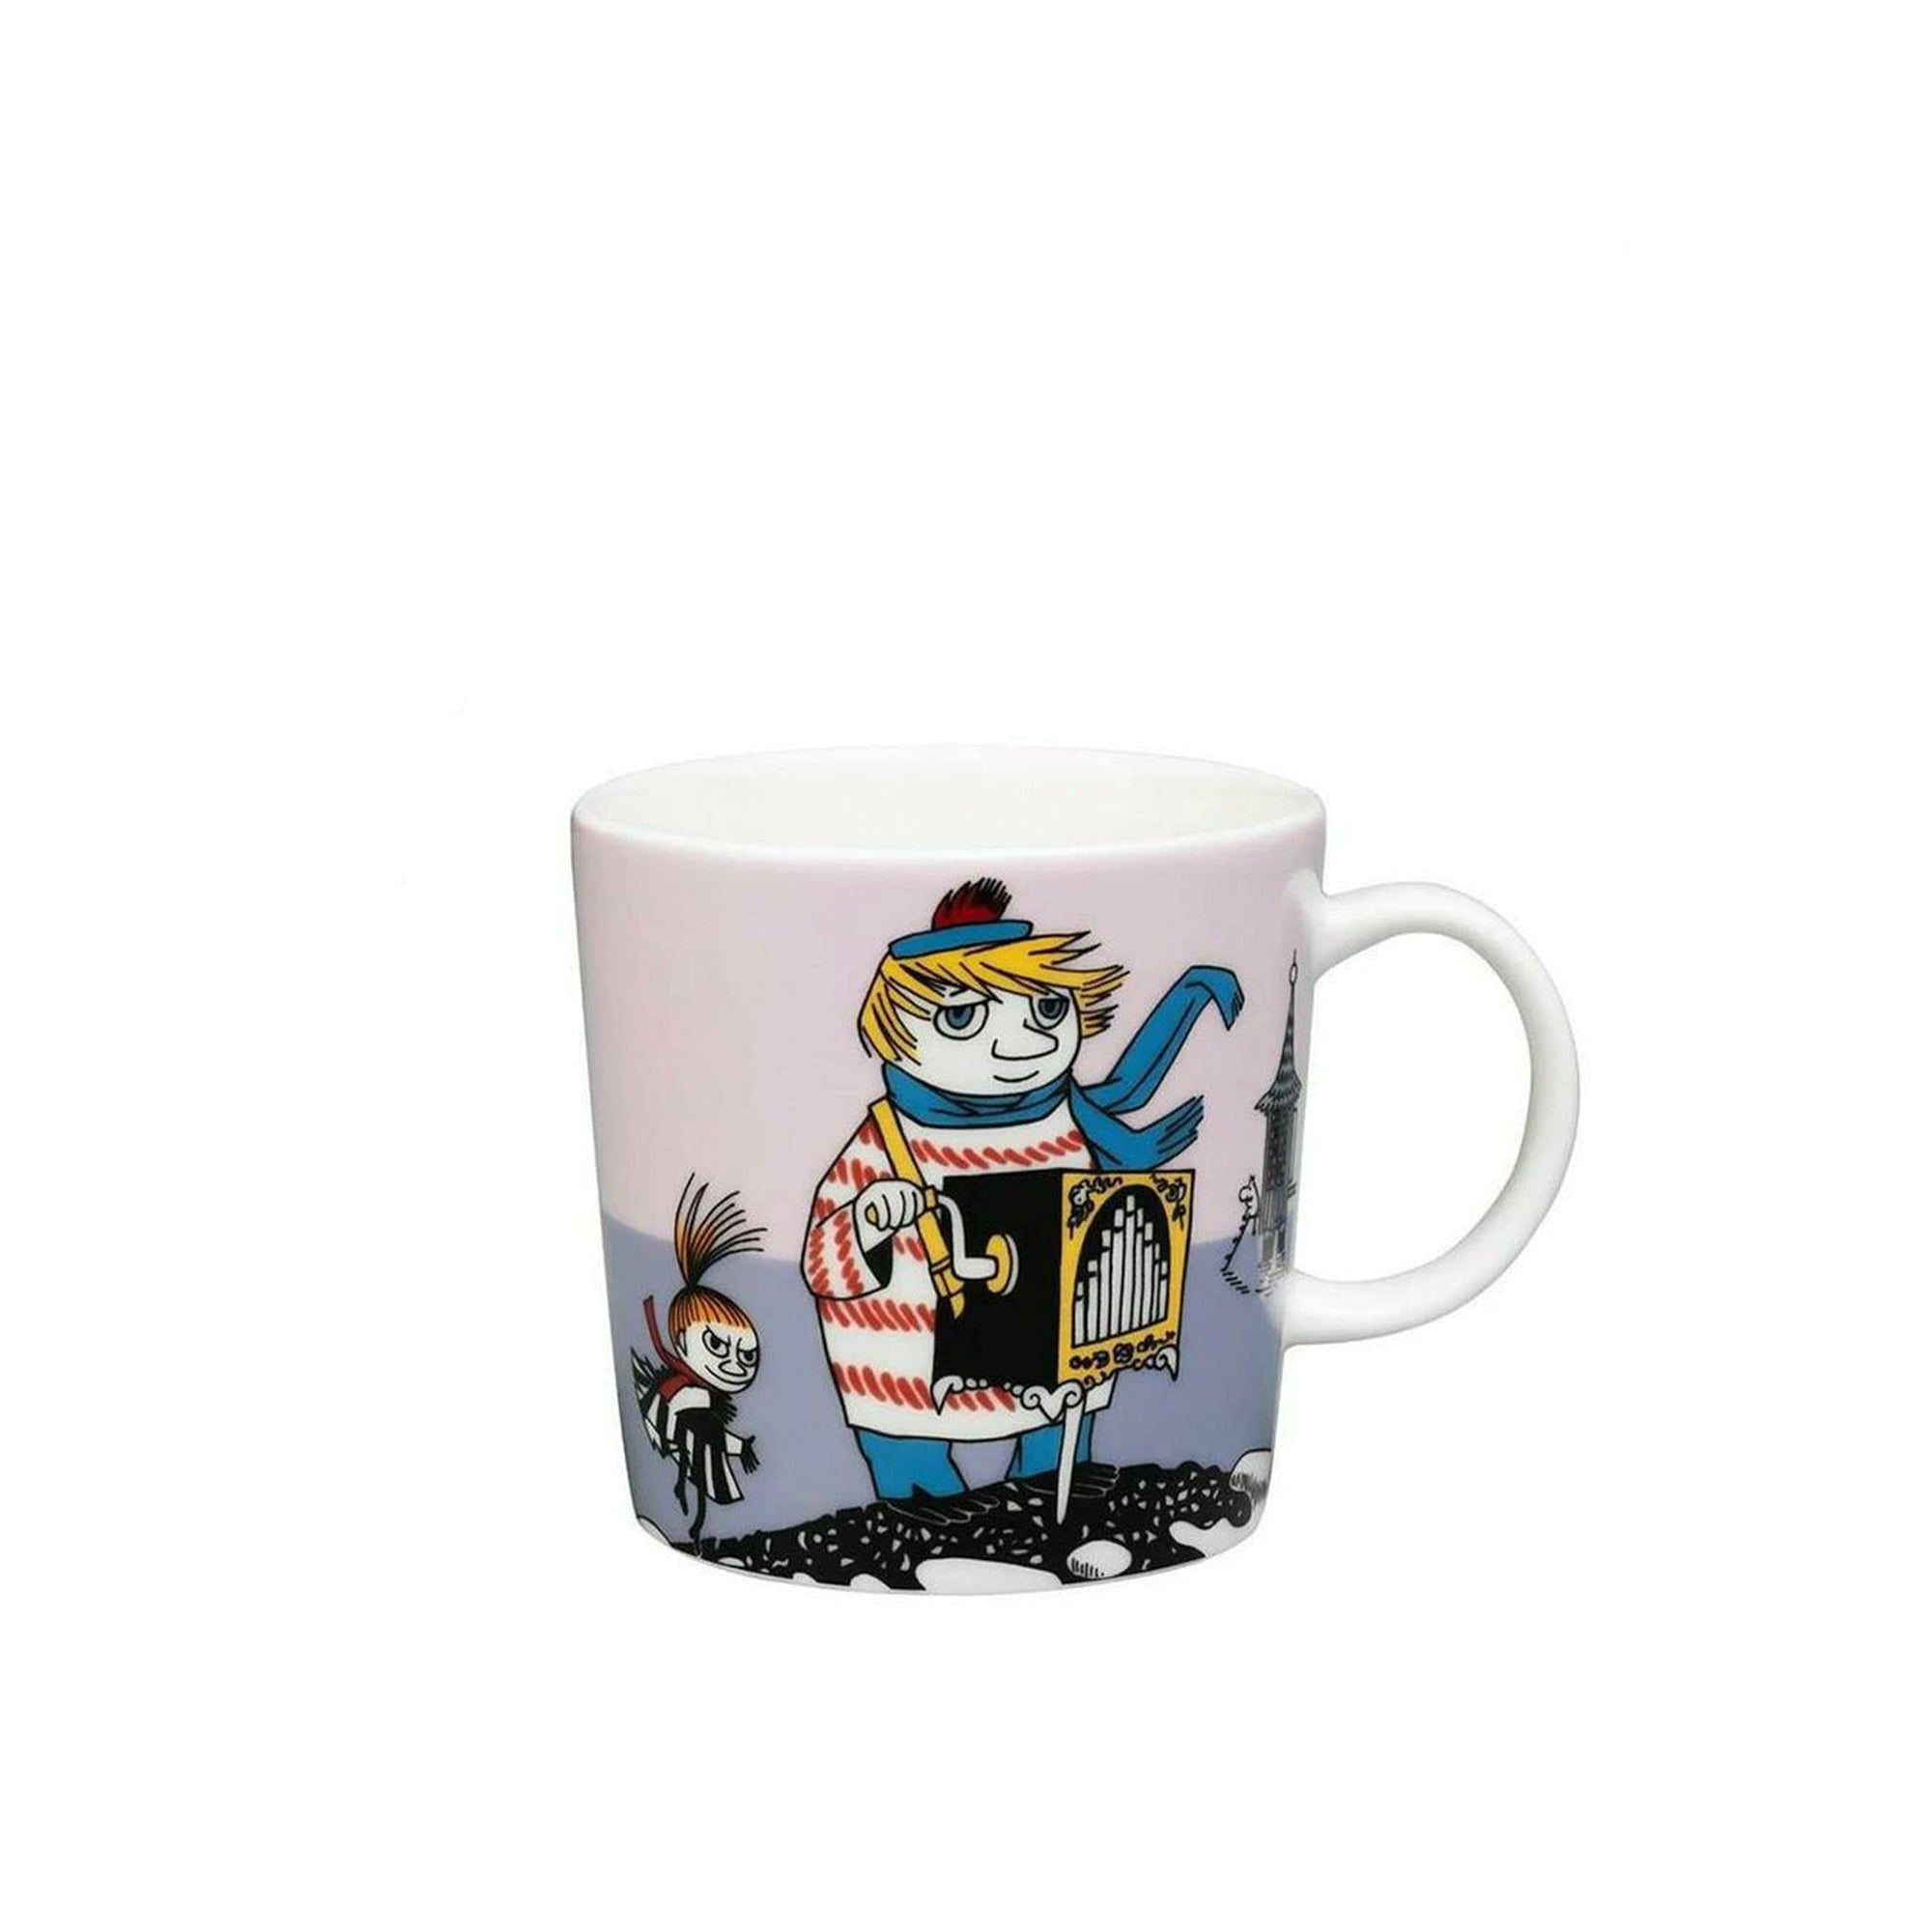 Too-ticky Moomin Mug